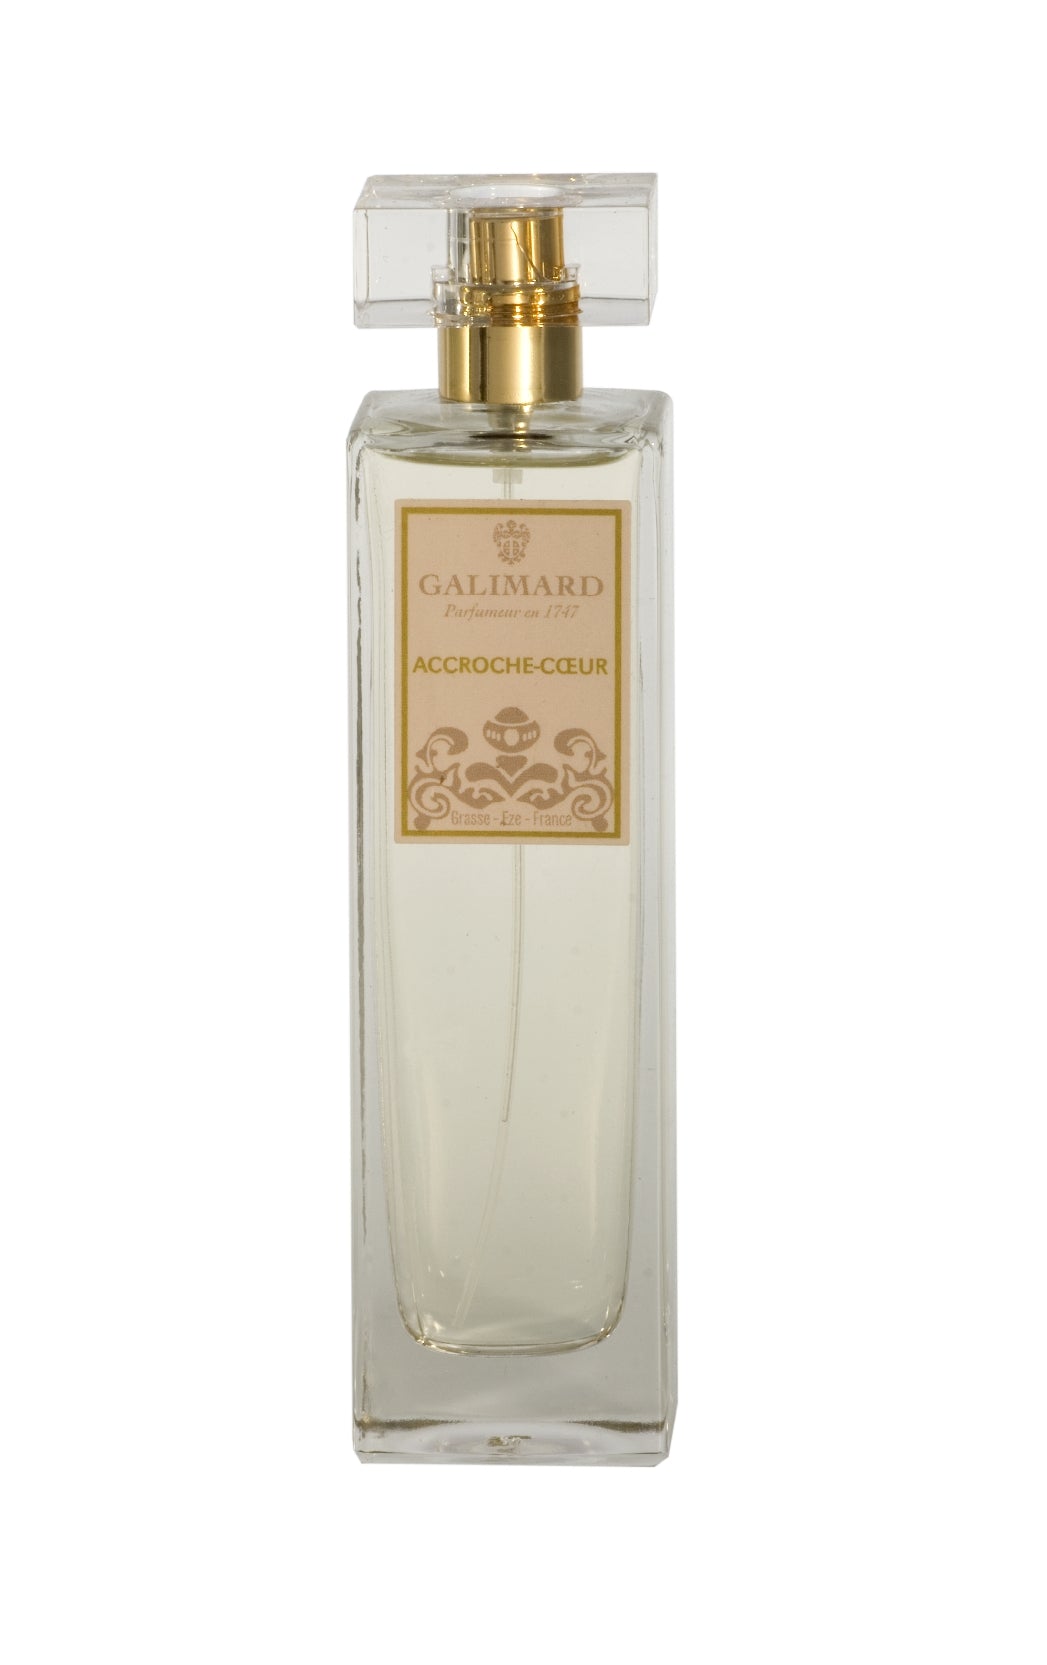 Galimard Accroche-Coeur – Perfume Shop